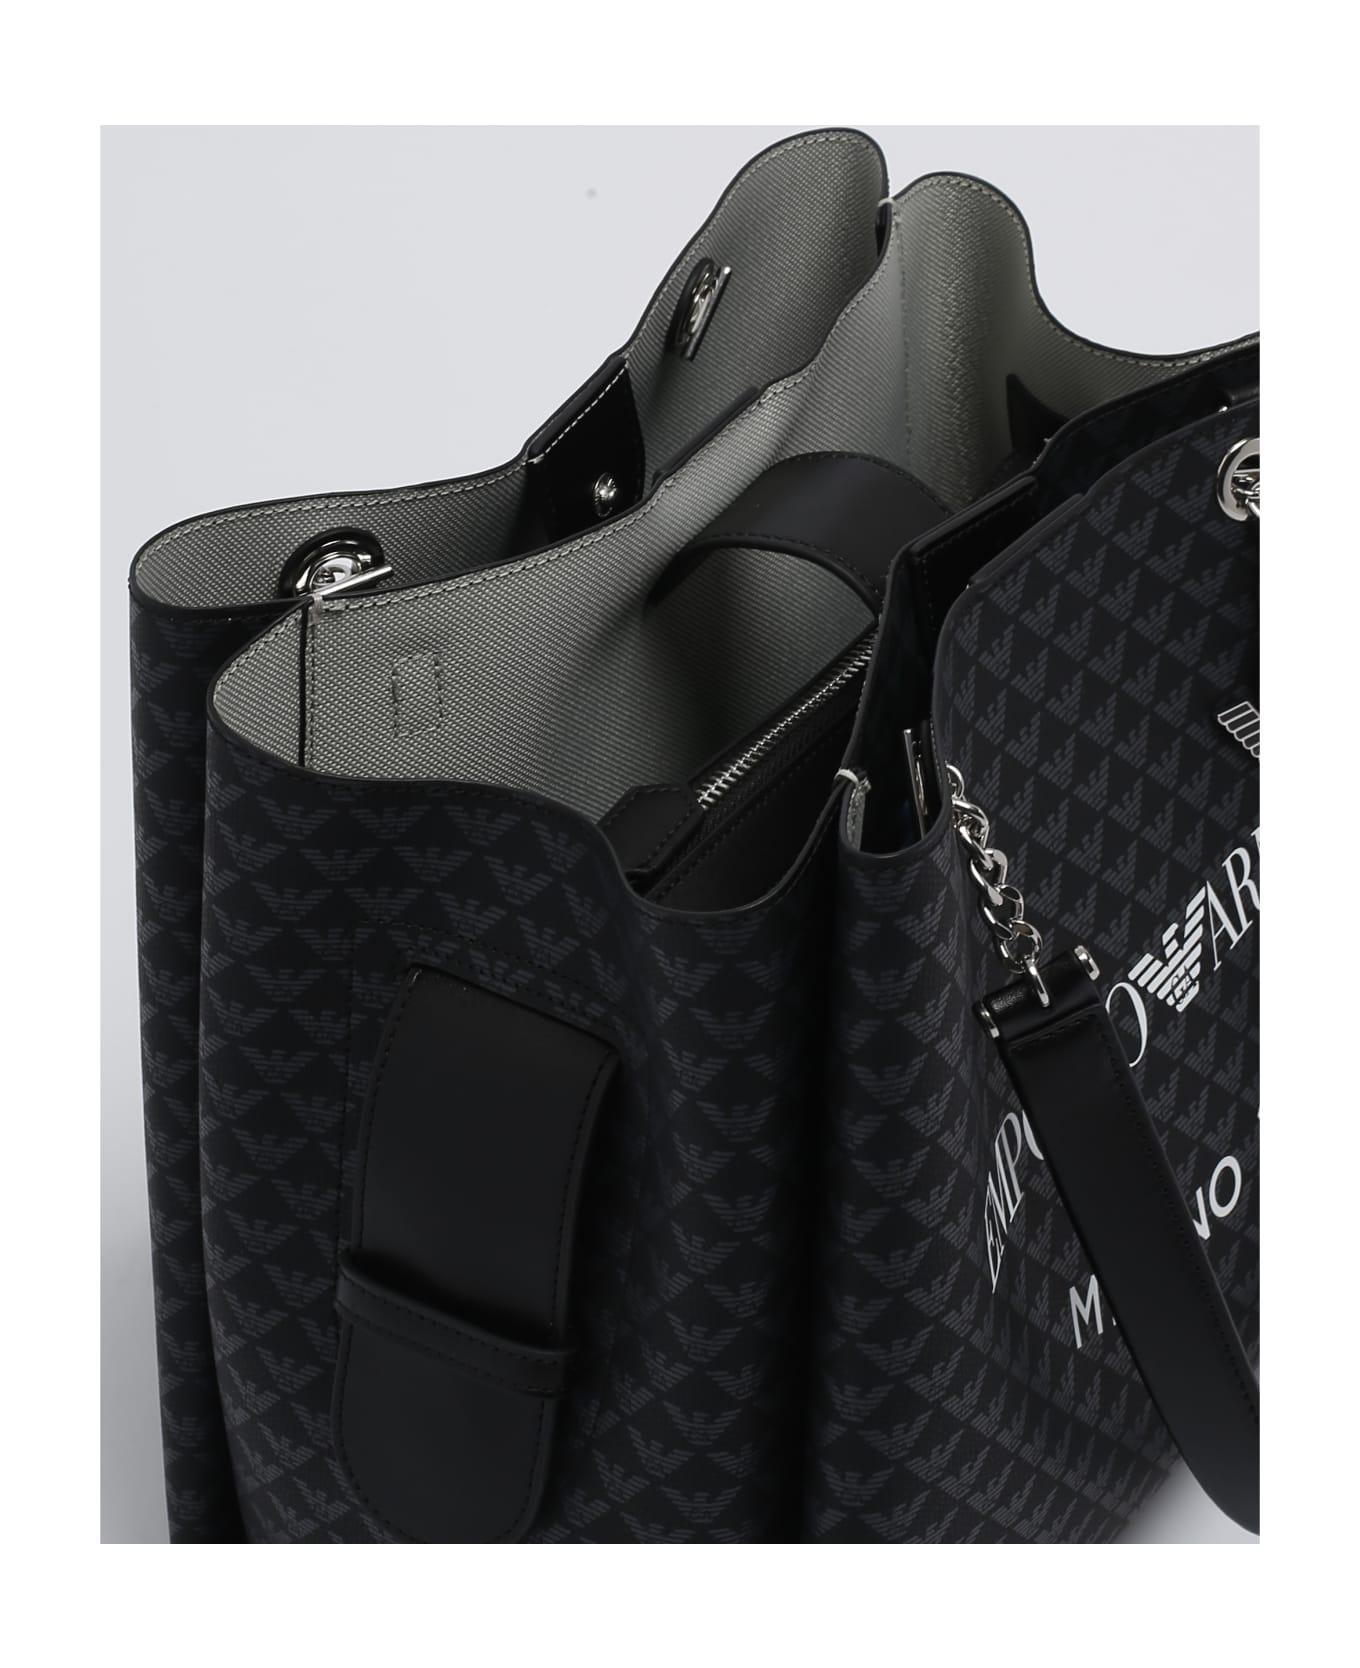 Emporio Armani Poliester Shoulder Bag - NERO-BIANCO